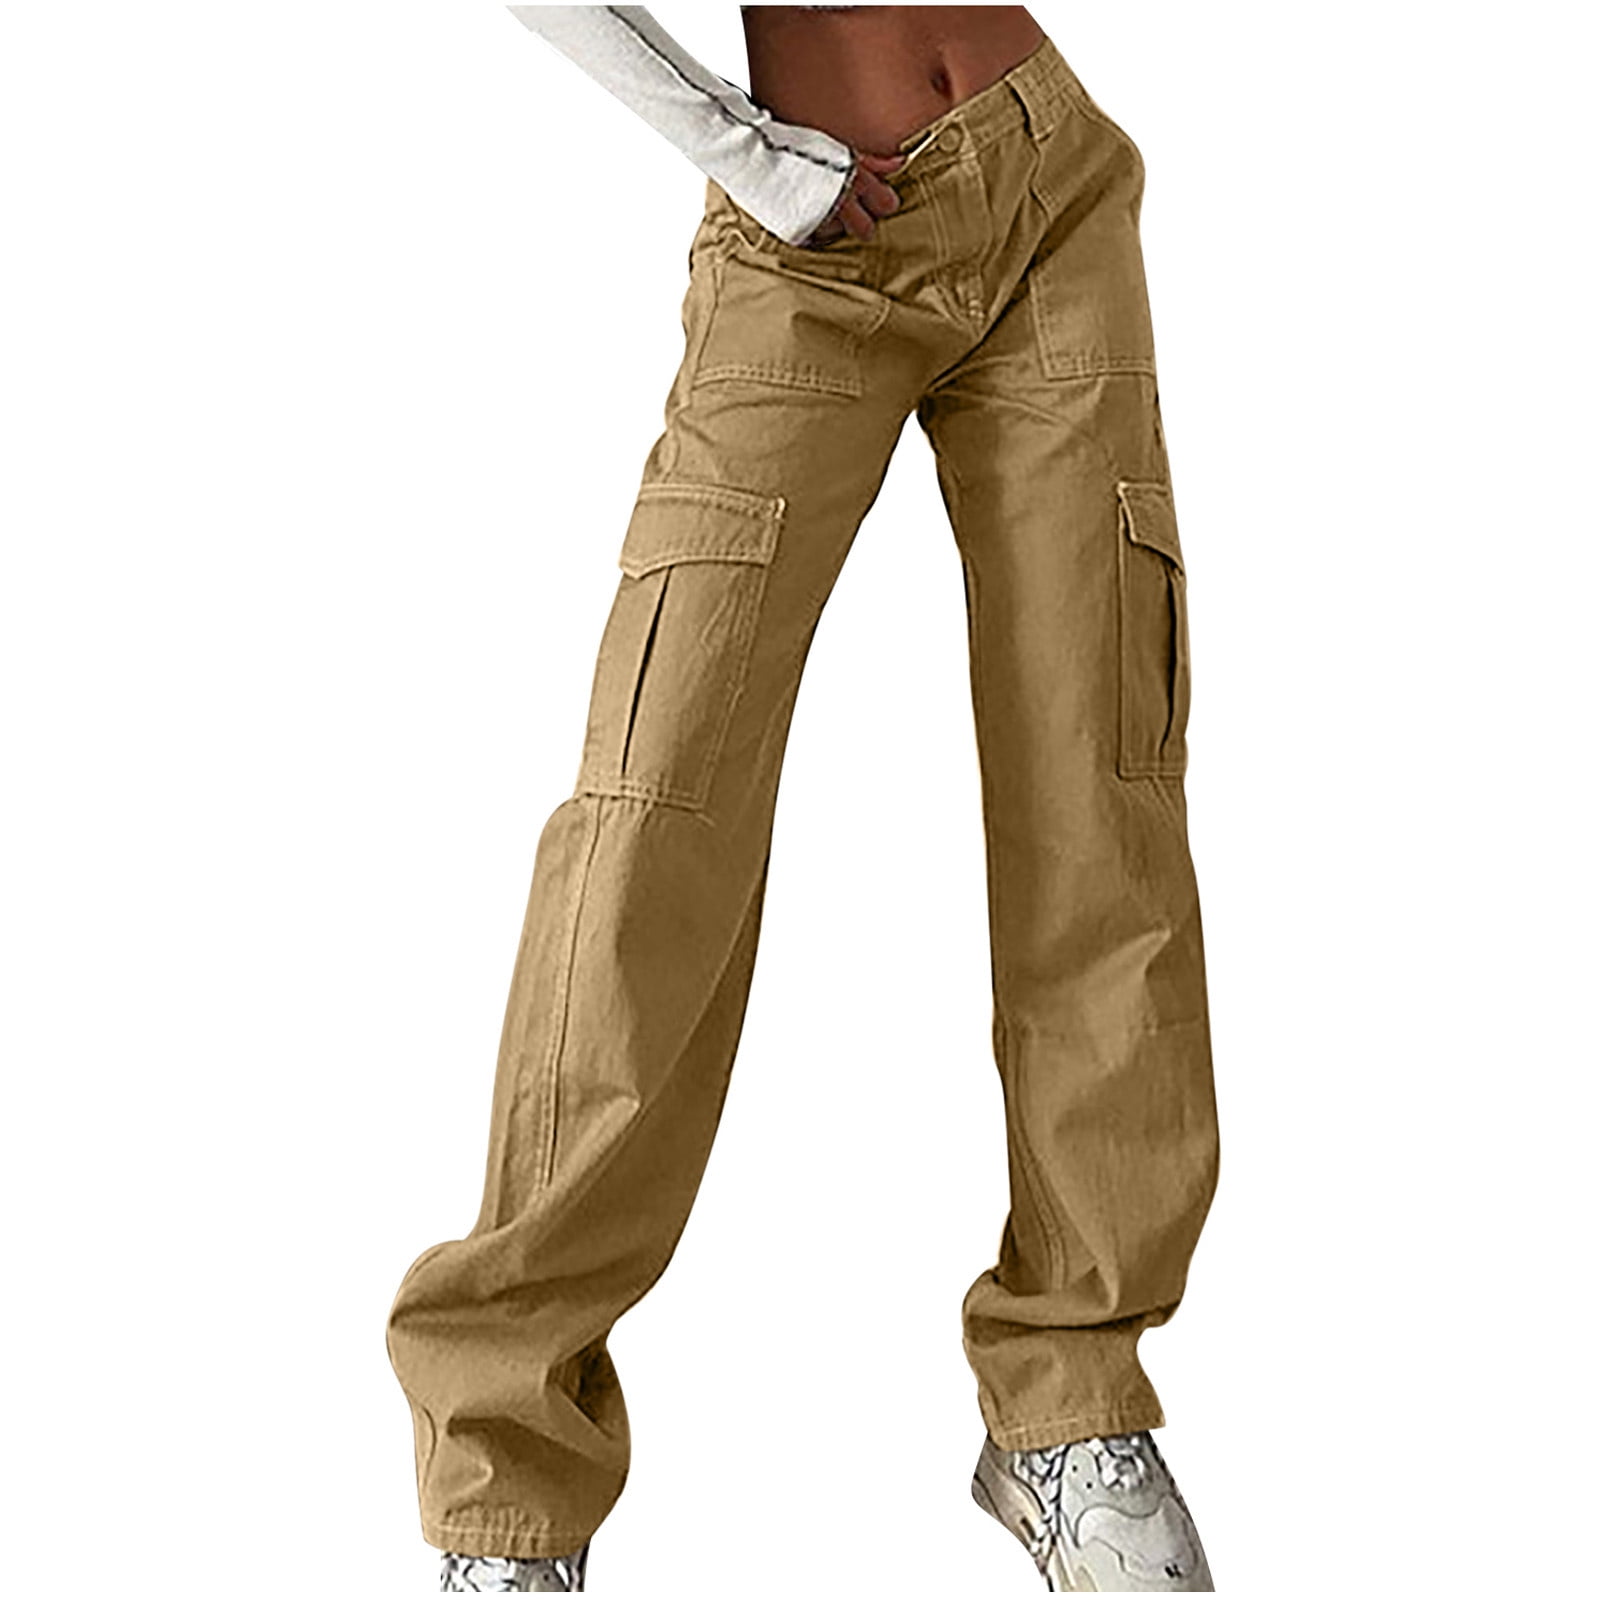 Mrat Full Length Pants Pants For Women Ladies Casual Pants Cowboy